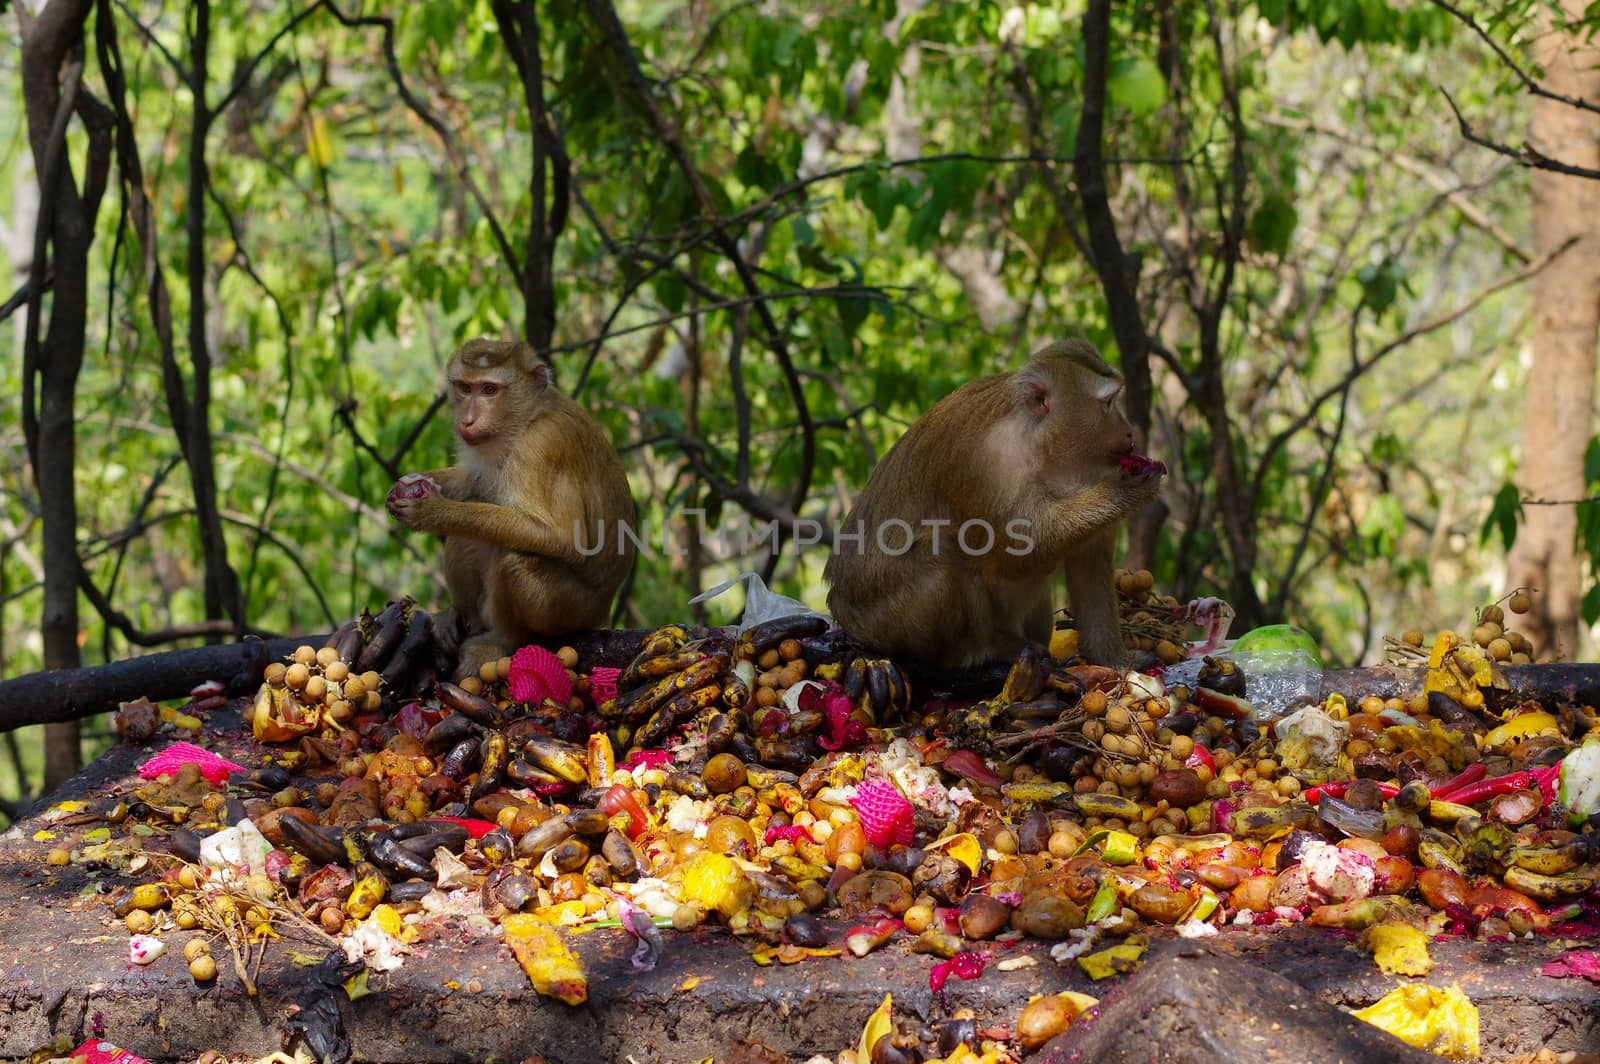 A macaca monkey family eating lot of fruits, Phuket Thailand.